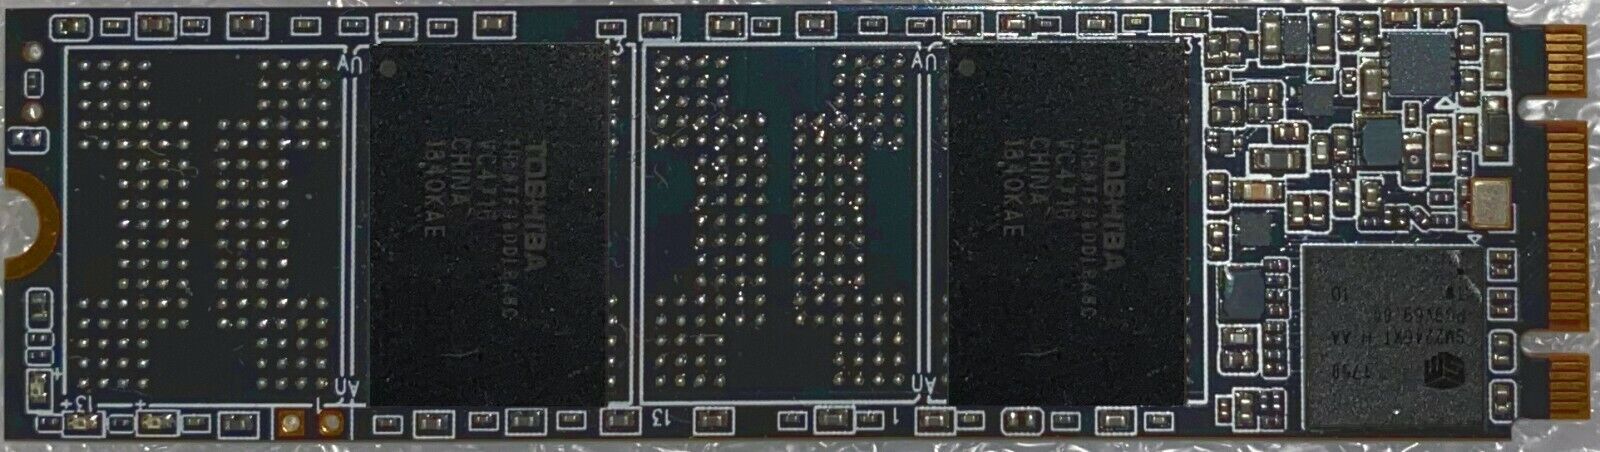 (Lot of 50) Toshiba 64GB pSLC NAND Flash 520MB/s TRIM SATA III NGFF M.2 2280 SSD